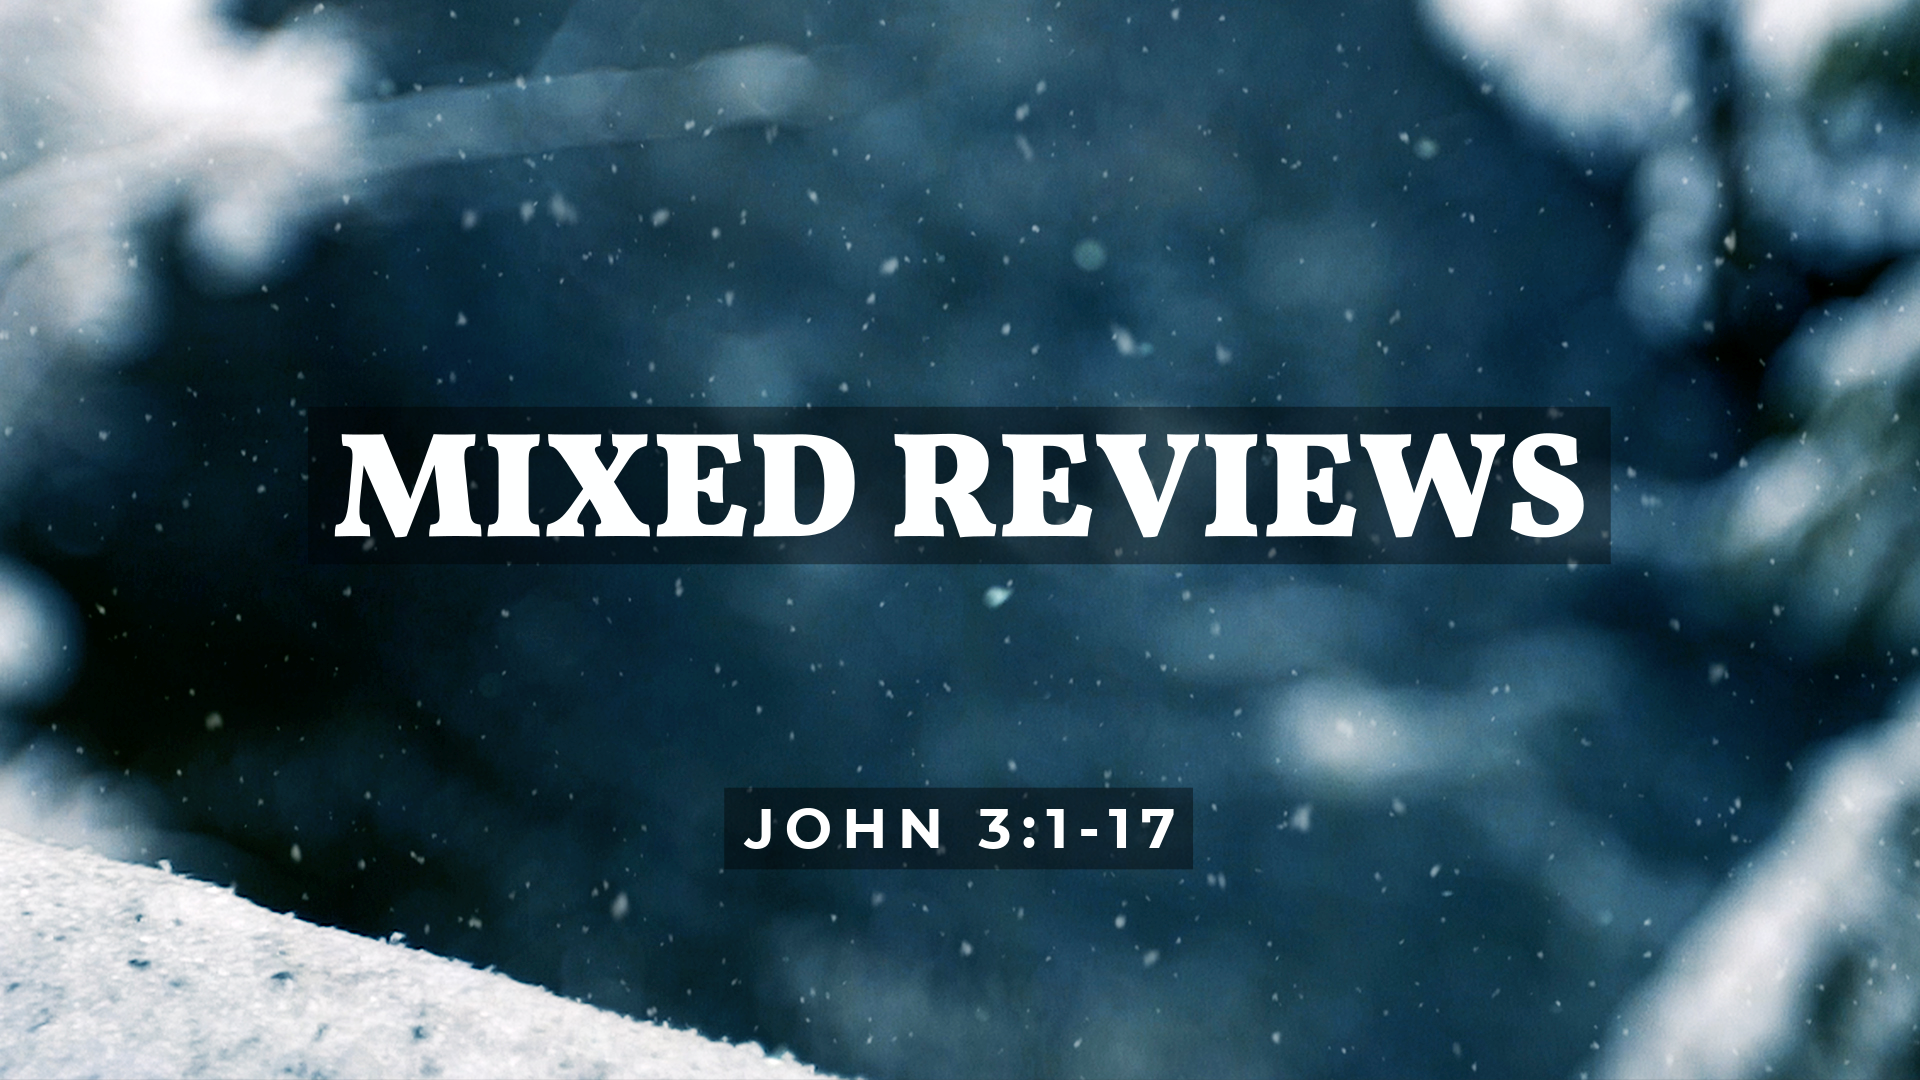 Jun 07, 2020 - Mixed Reviews (Video) - John 3:1-17